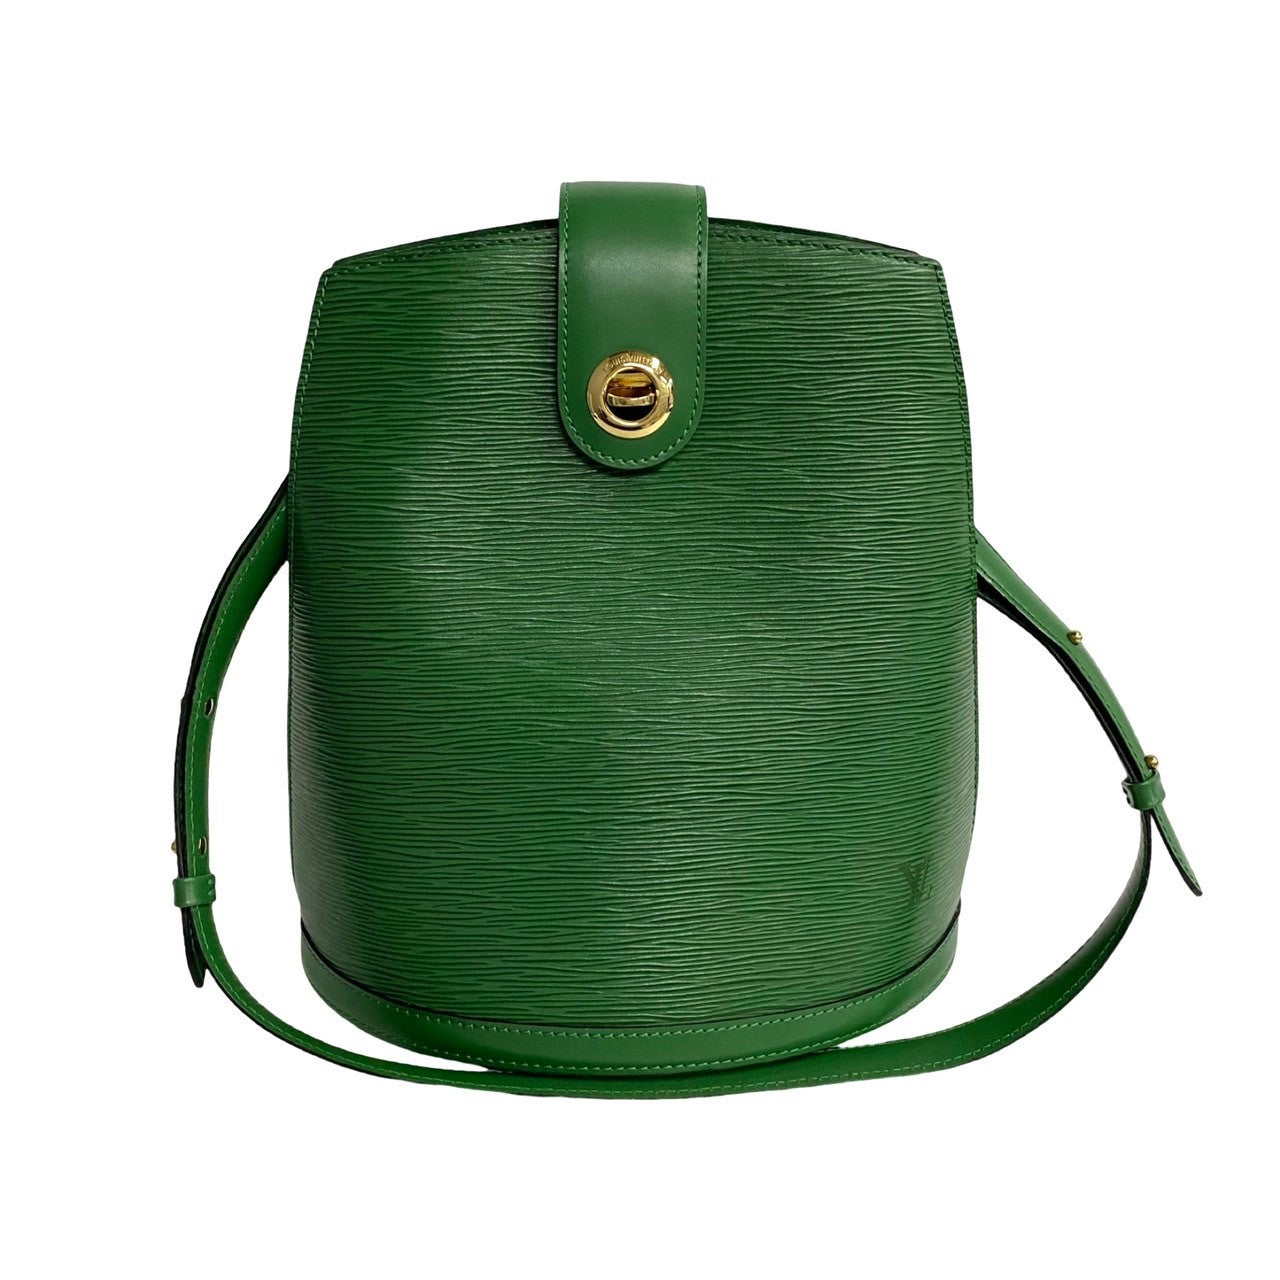 Louis Vuitton Cluny Leather Shoulder Bag M52254 in Excellent condition